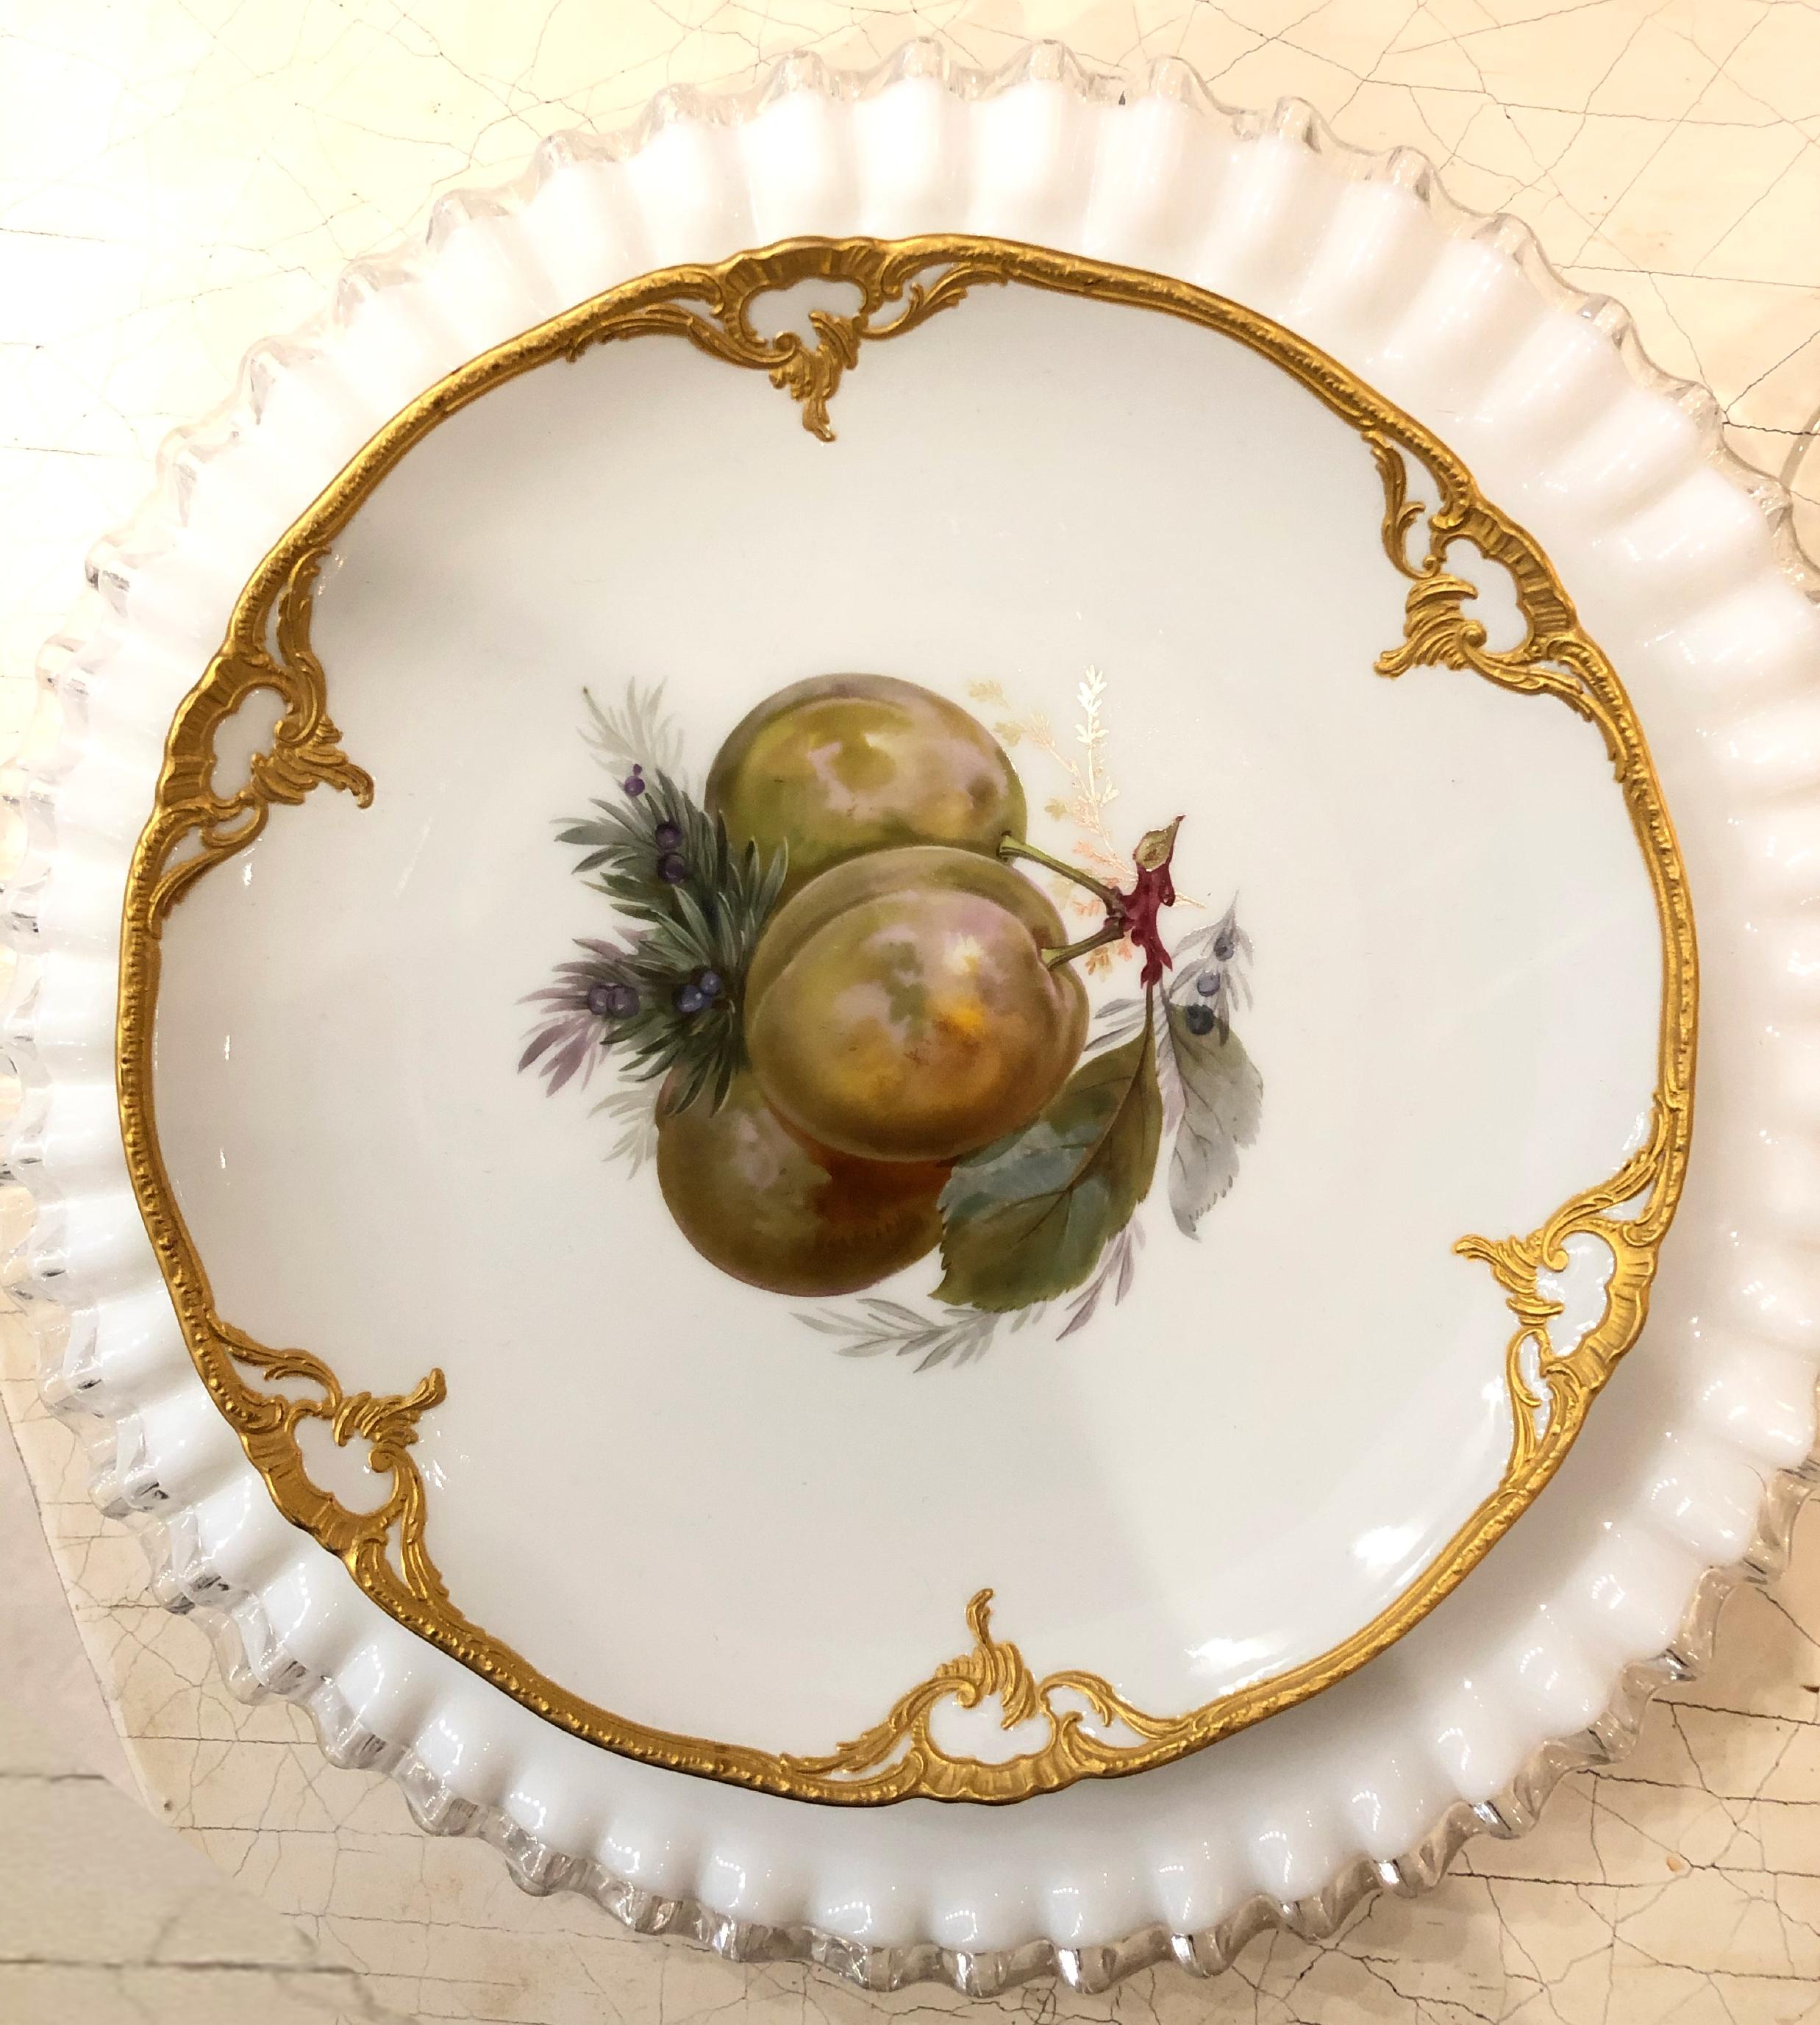 Set of Eight Porcelain Dessert Plates Depicting Fruit with 14k Gold Detail 3